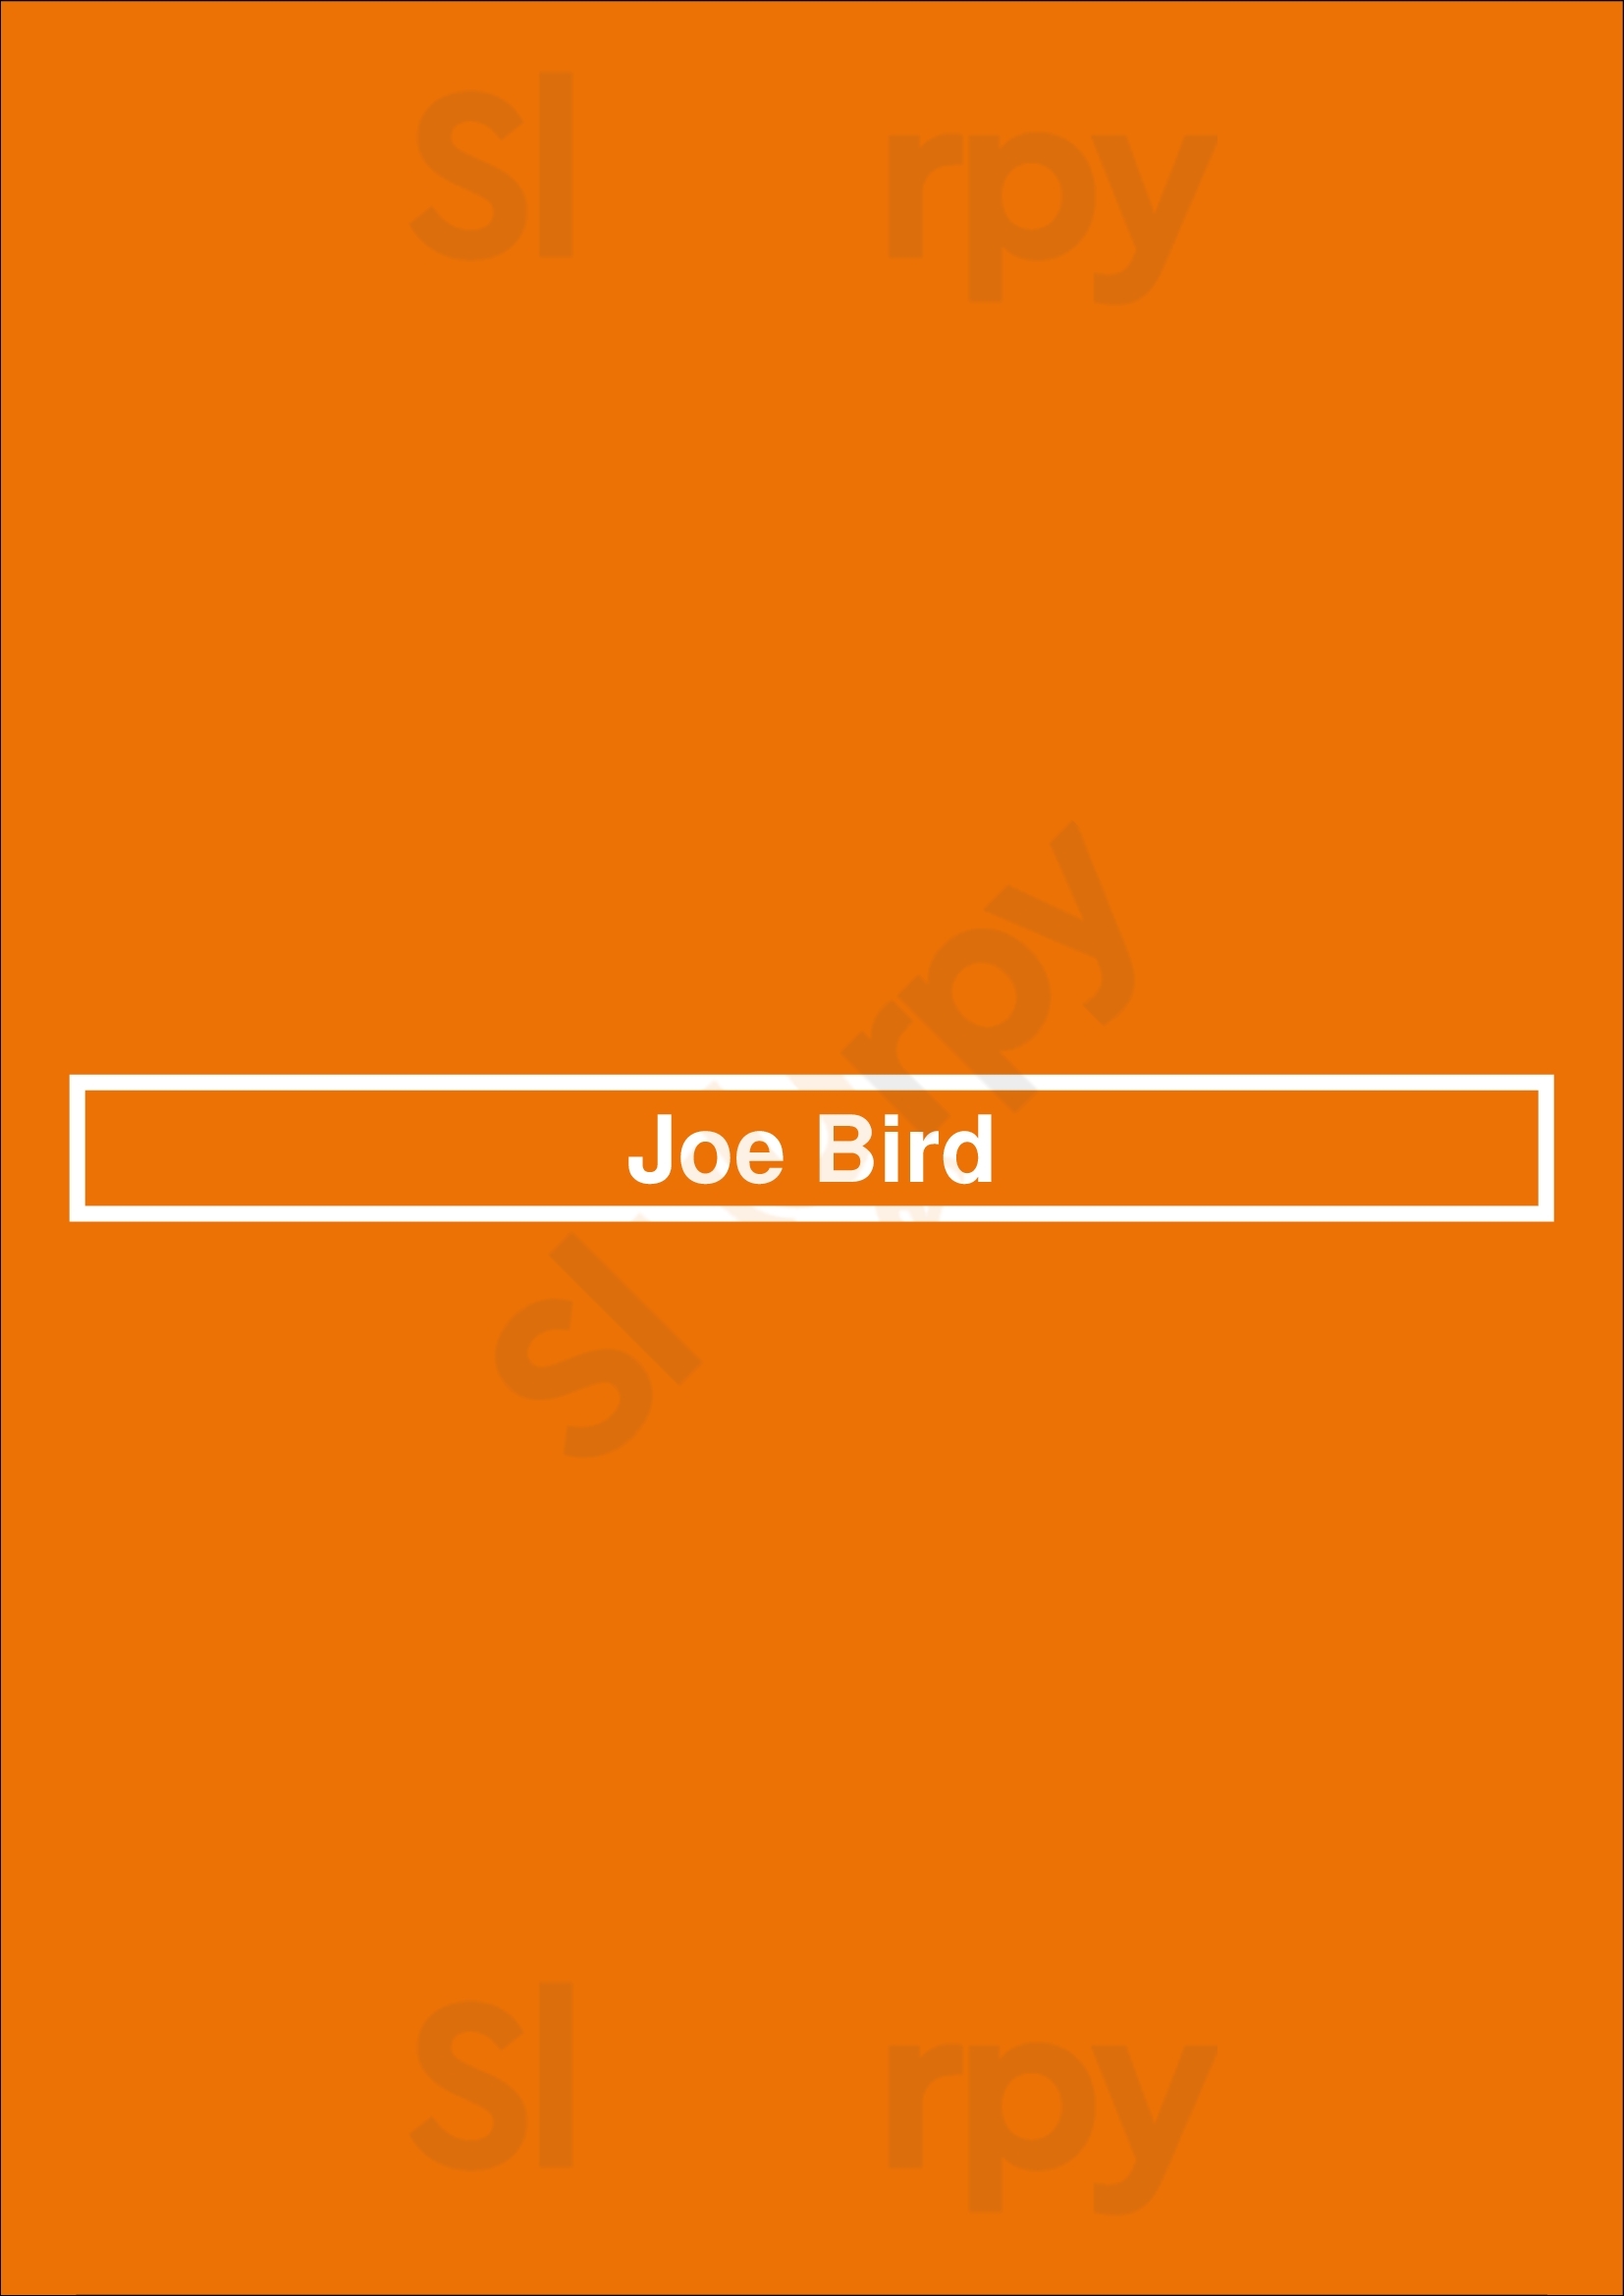 Joe Bird Toronto Menu - 1